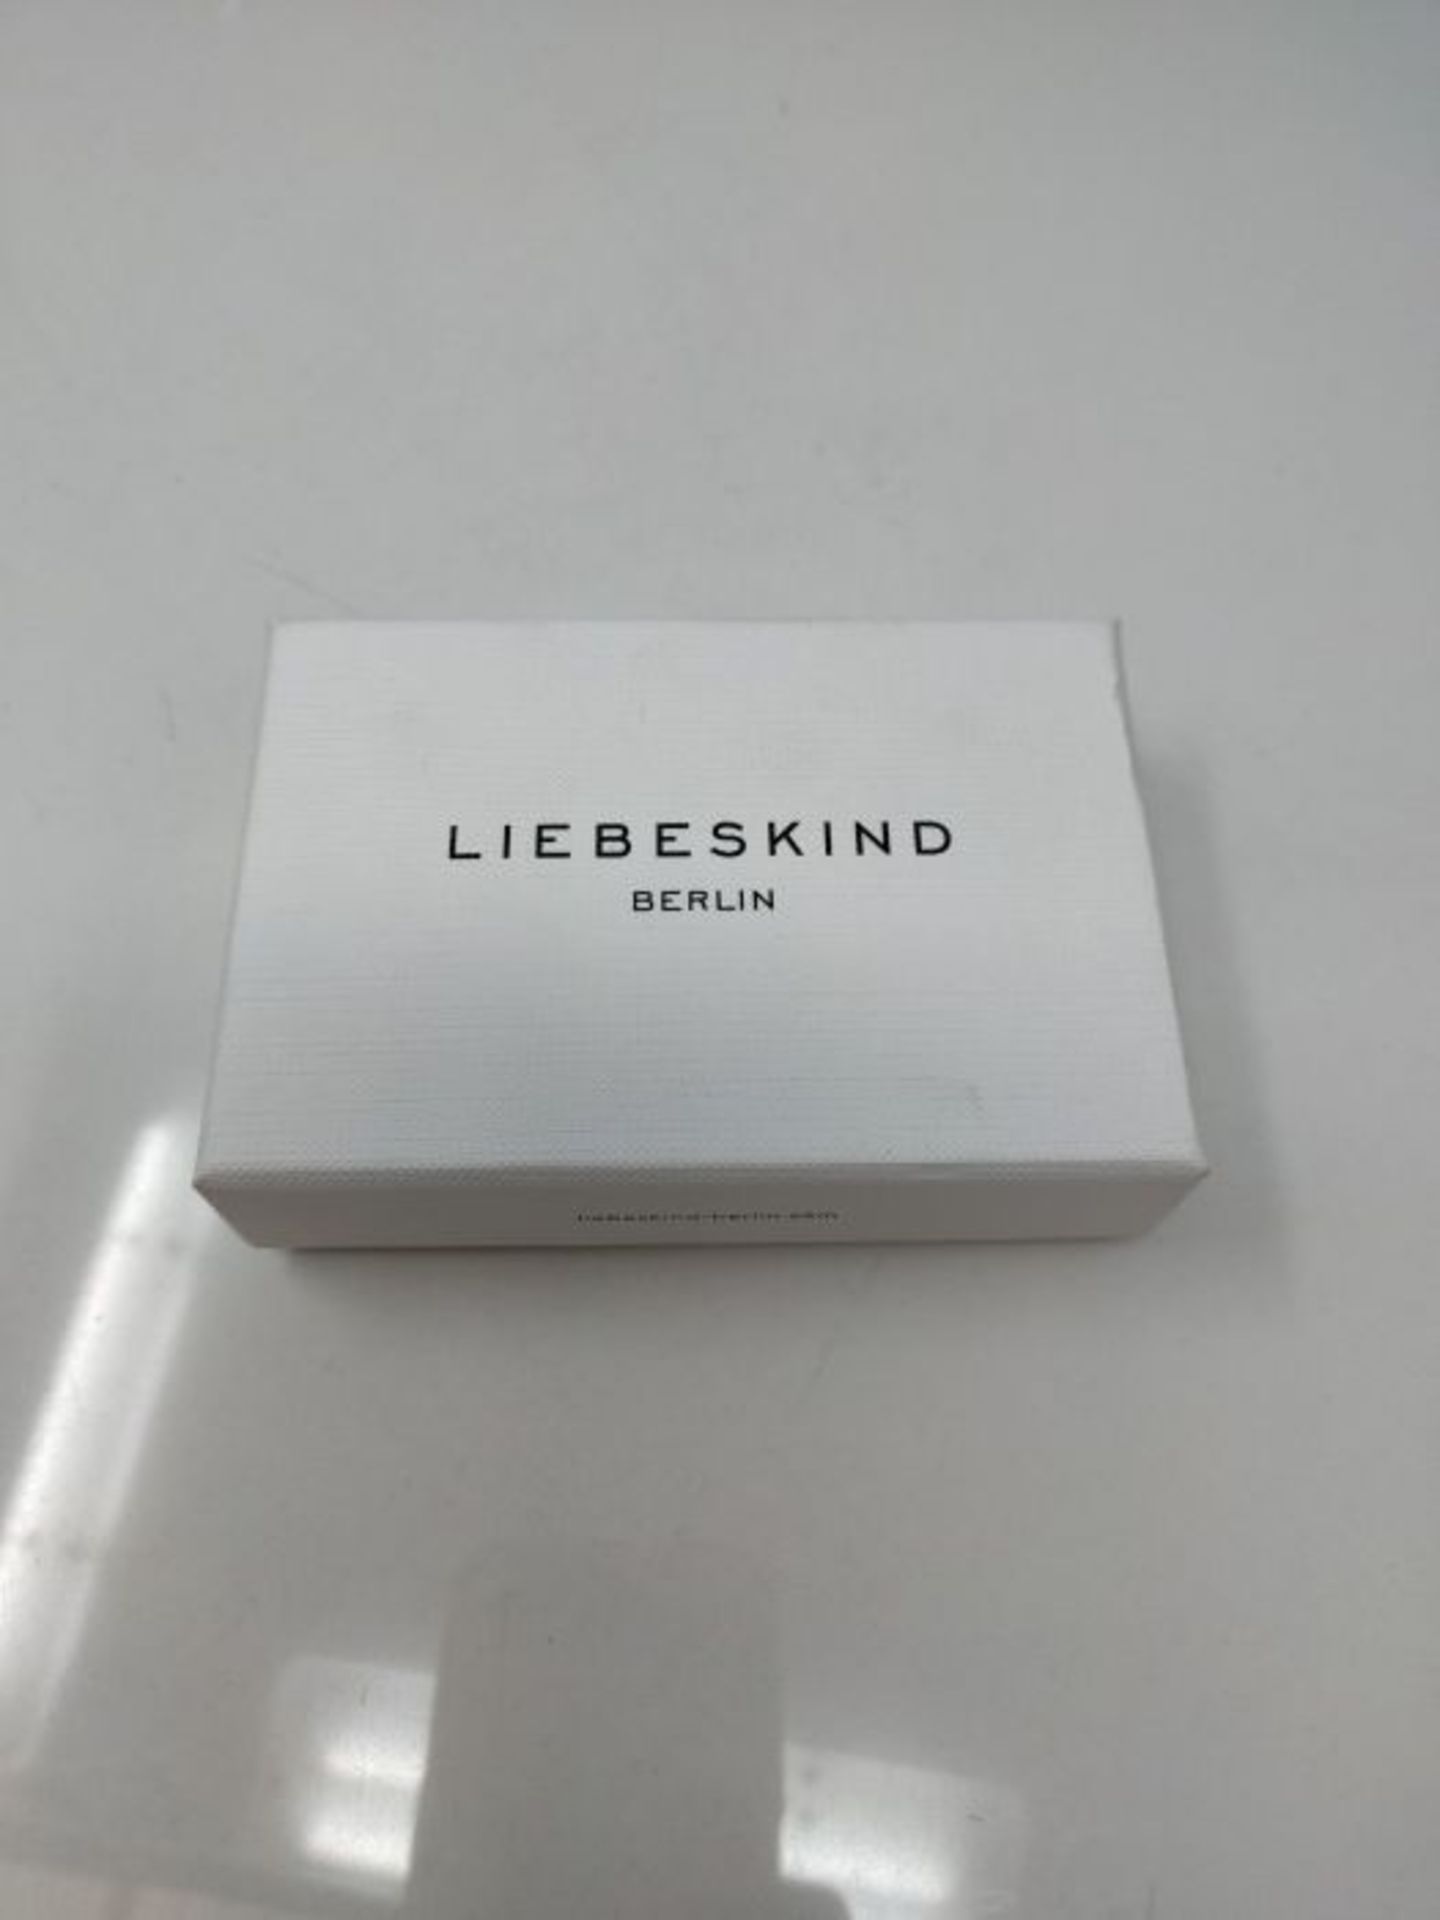 [CRACKED] Liebeskind Berlin Damen Armband Herz Edelstahl Silber 20 cm (schwarz), LJ-03 - Image 2 of 3